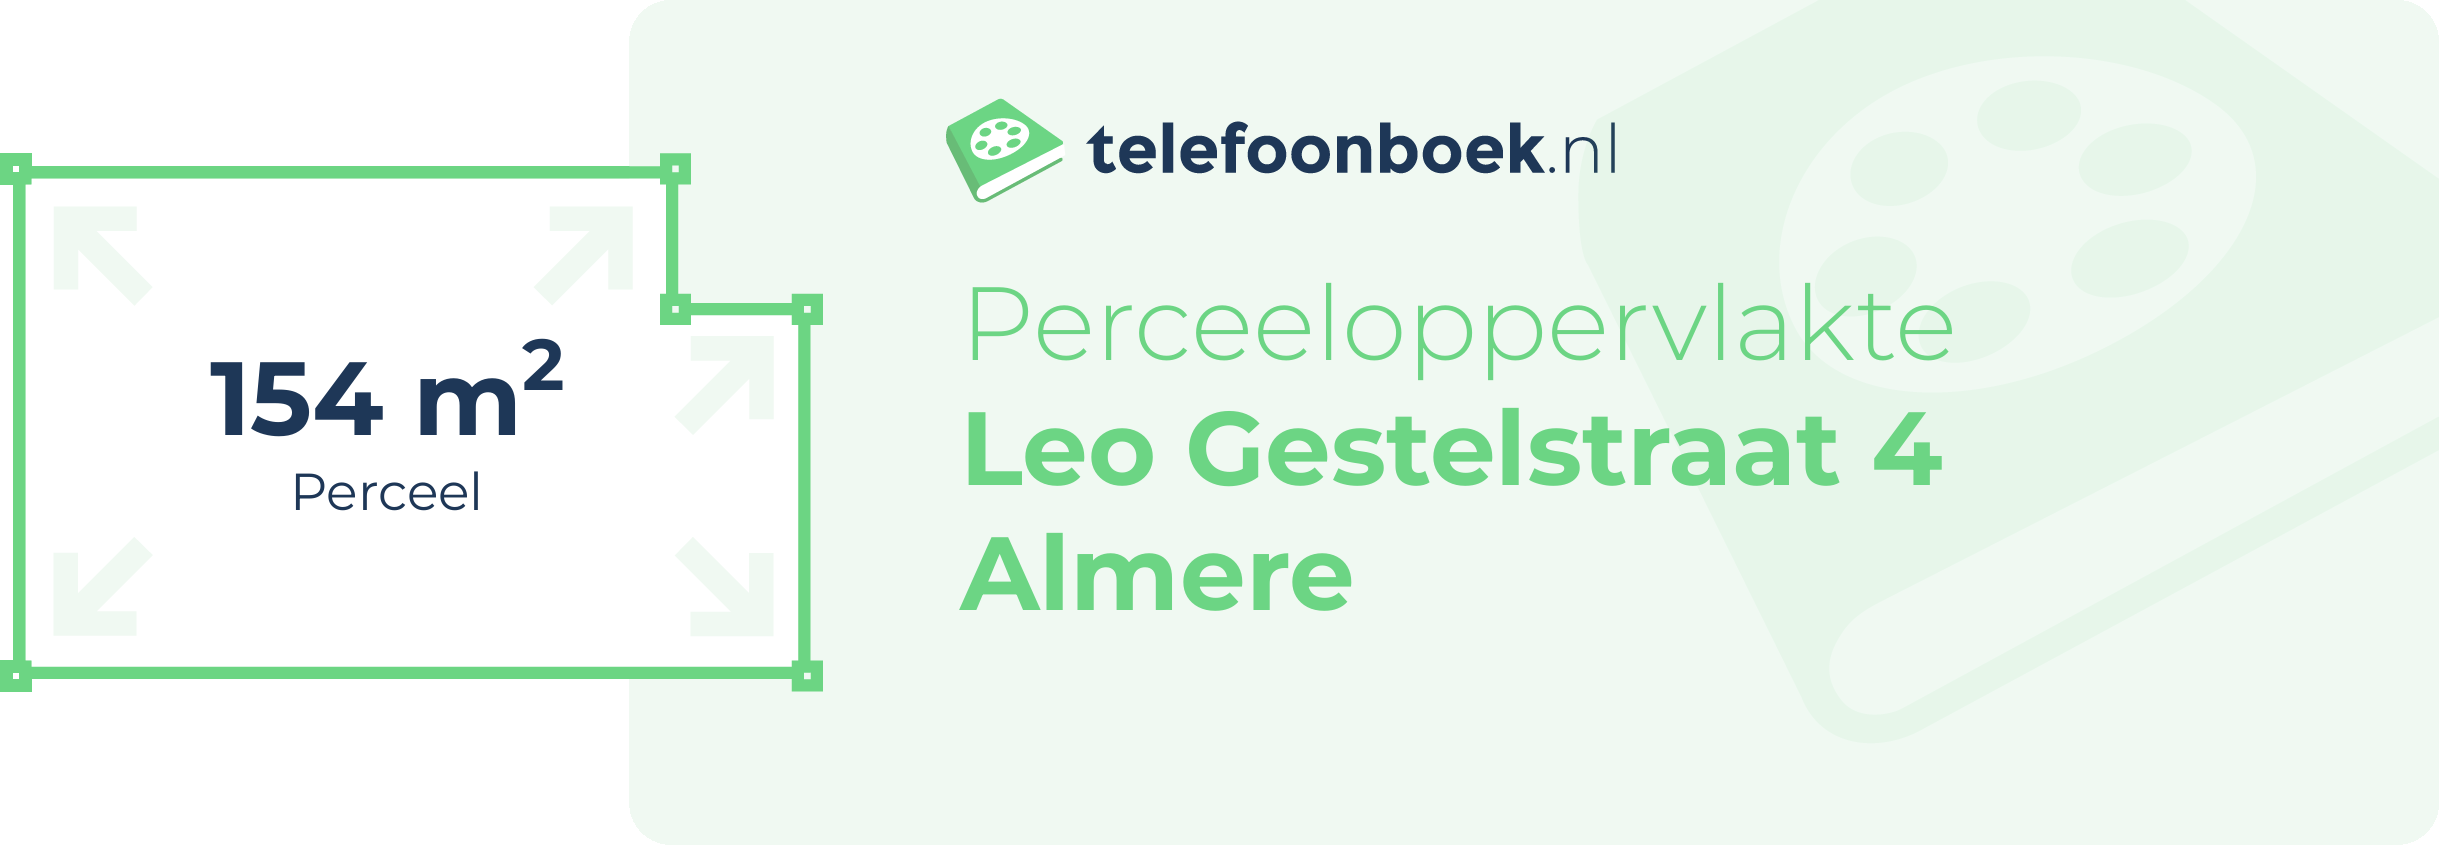 Perceeloppervlakte Leo Gestelstraat 4 Almere